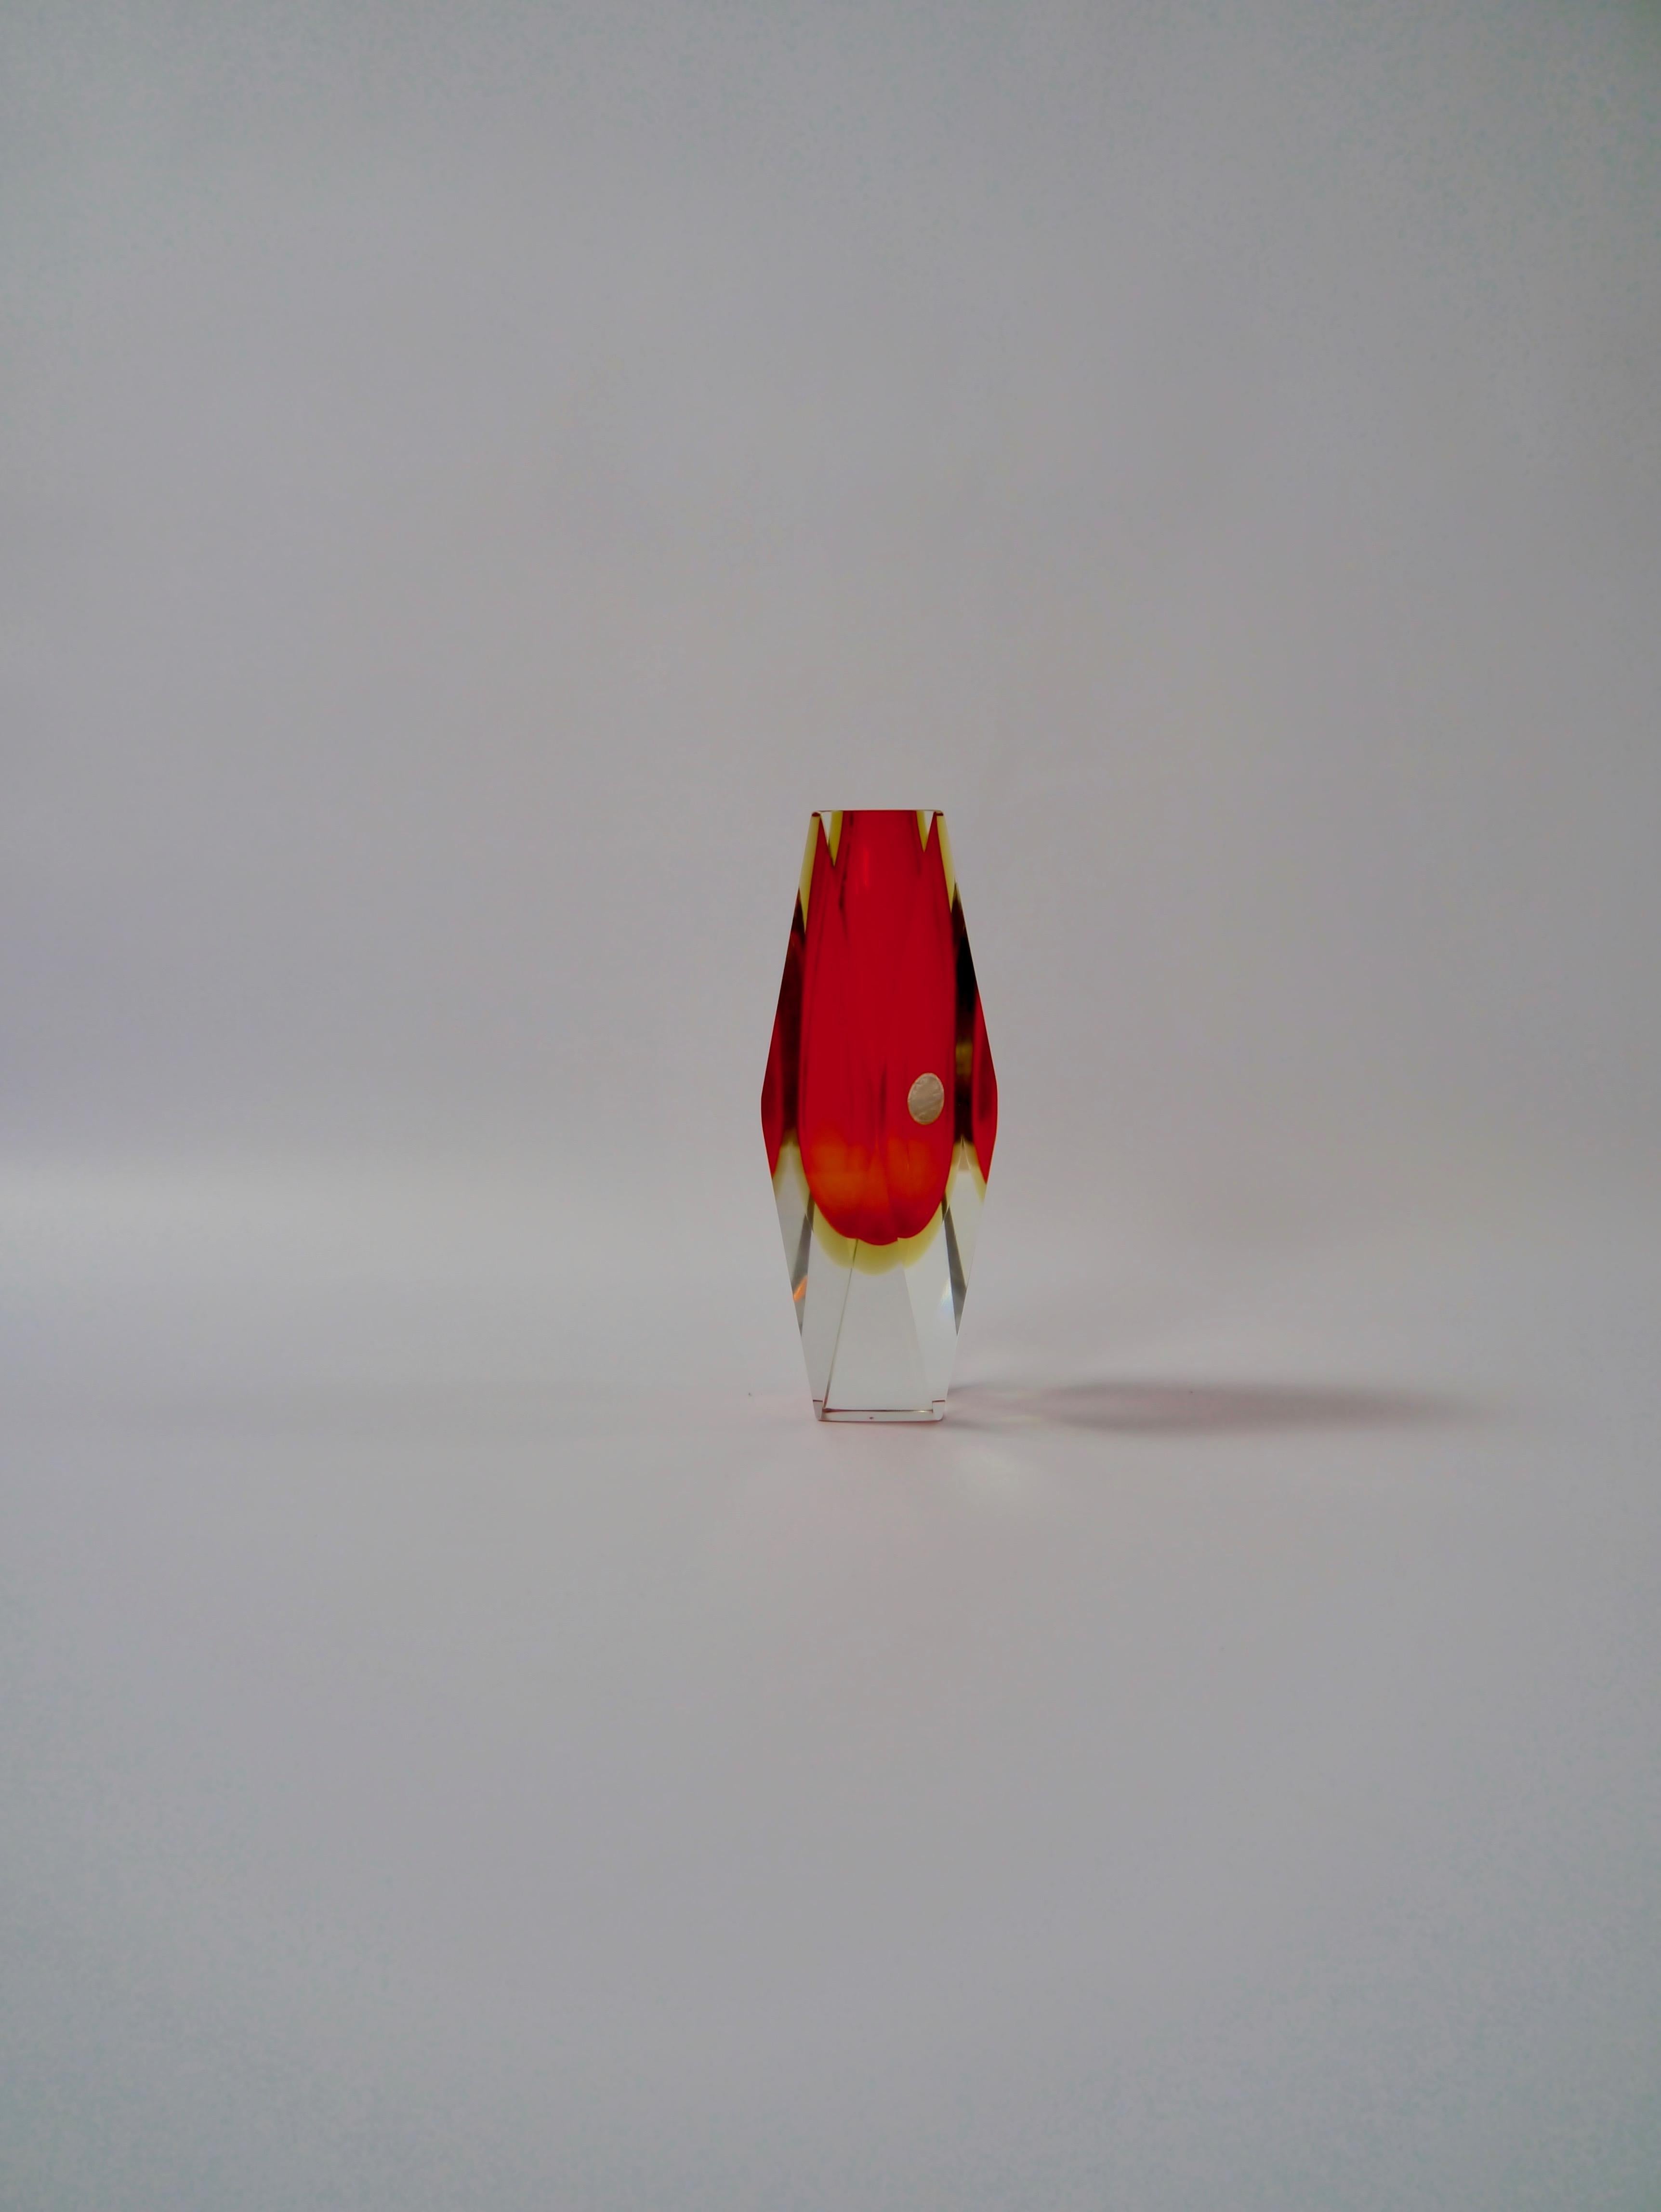 Ruby red glass vase designed by Alessandro Mandruzzato for Vetreria Artistica Oball, Italy, 1970s. Striking sharp 